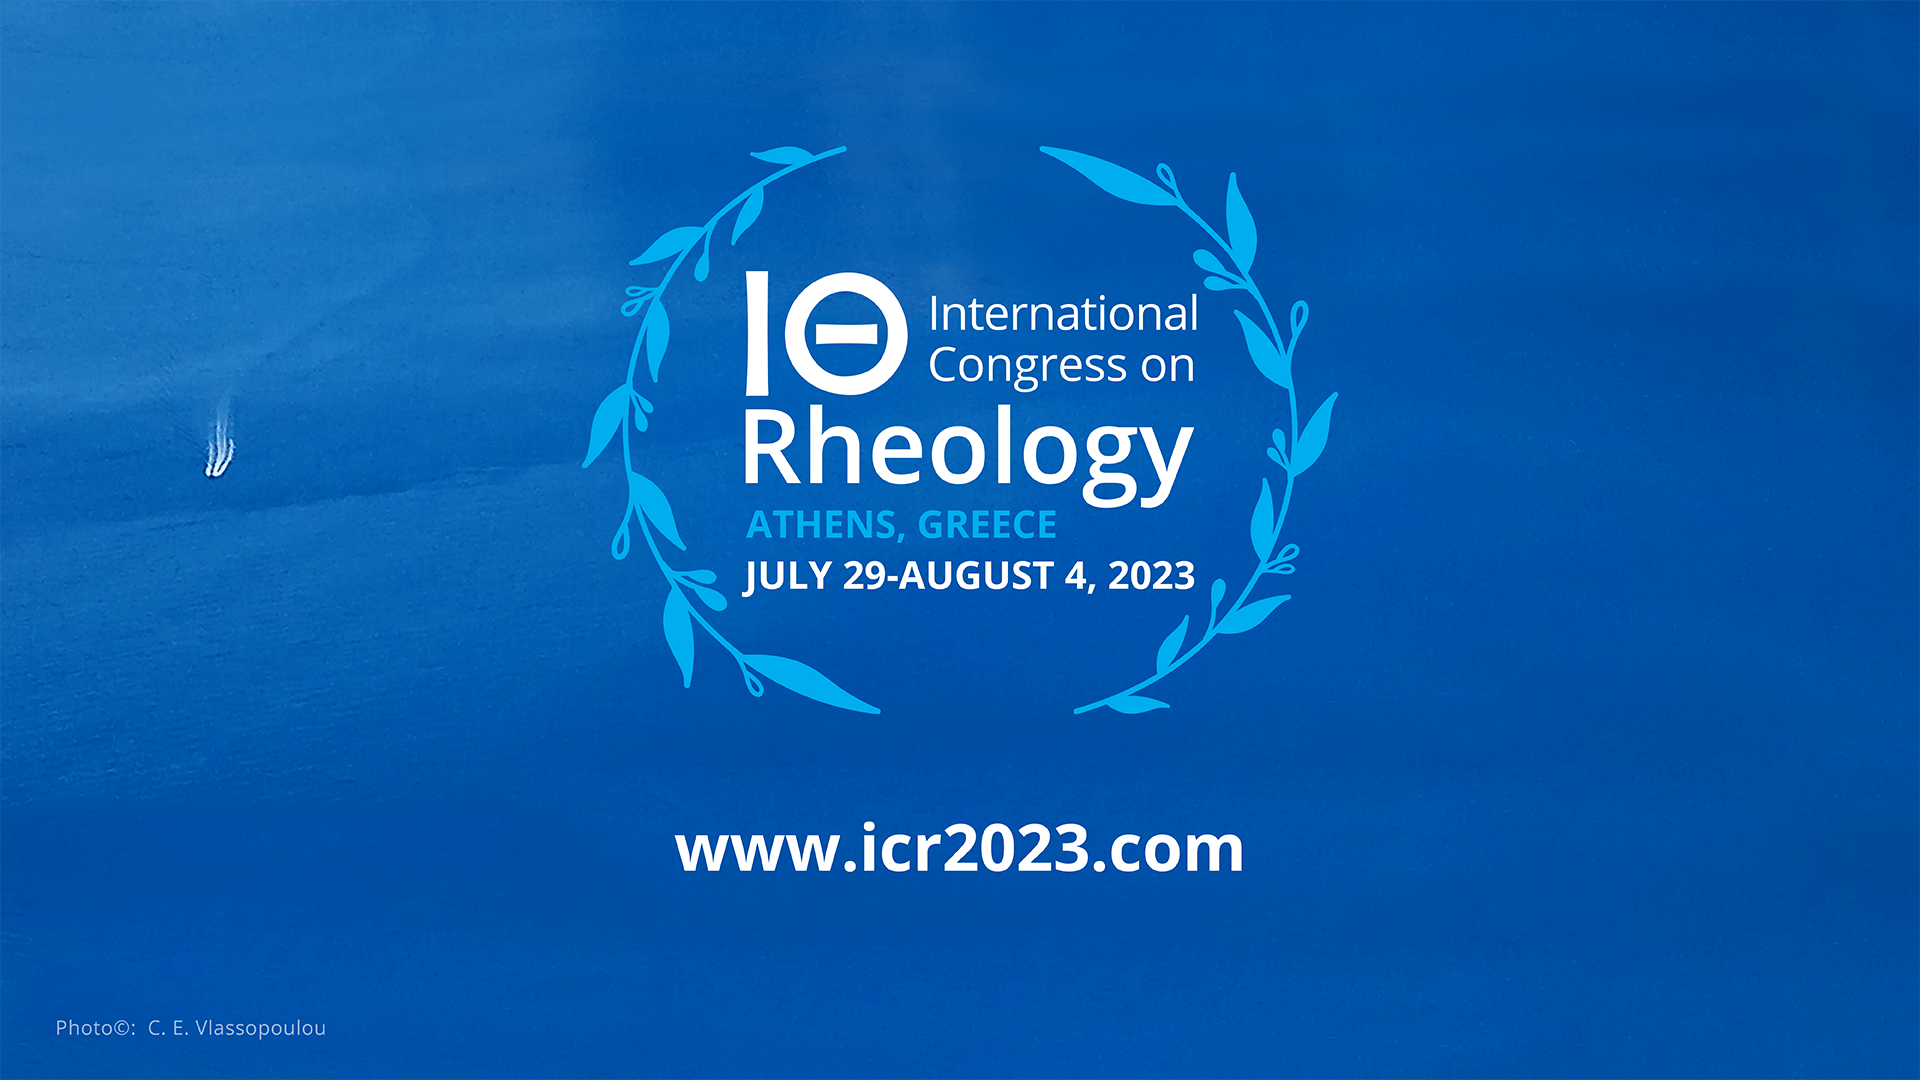 Kind reminder 19th International Congress on Rheology (ICR2023